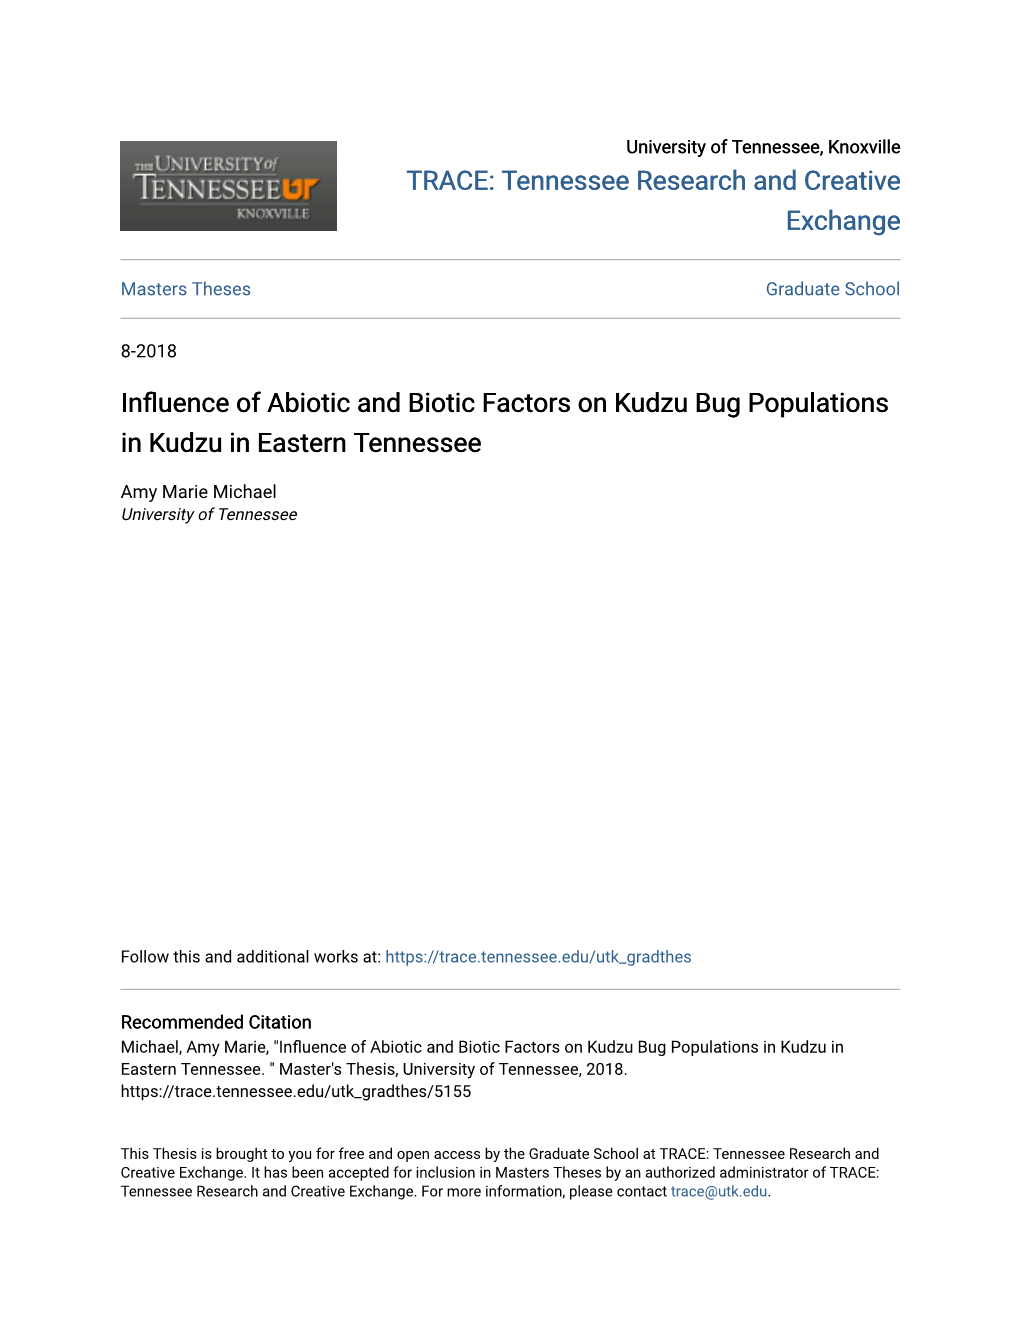 Influence of Abiotic and Biotic Factors on Kudzu Bug Populations in Kudzu in Eastern Tennessee